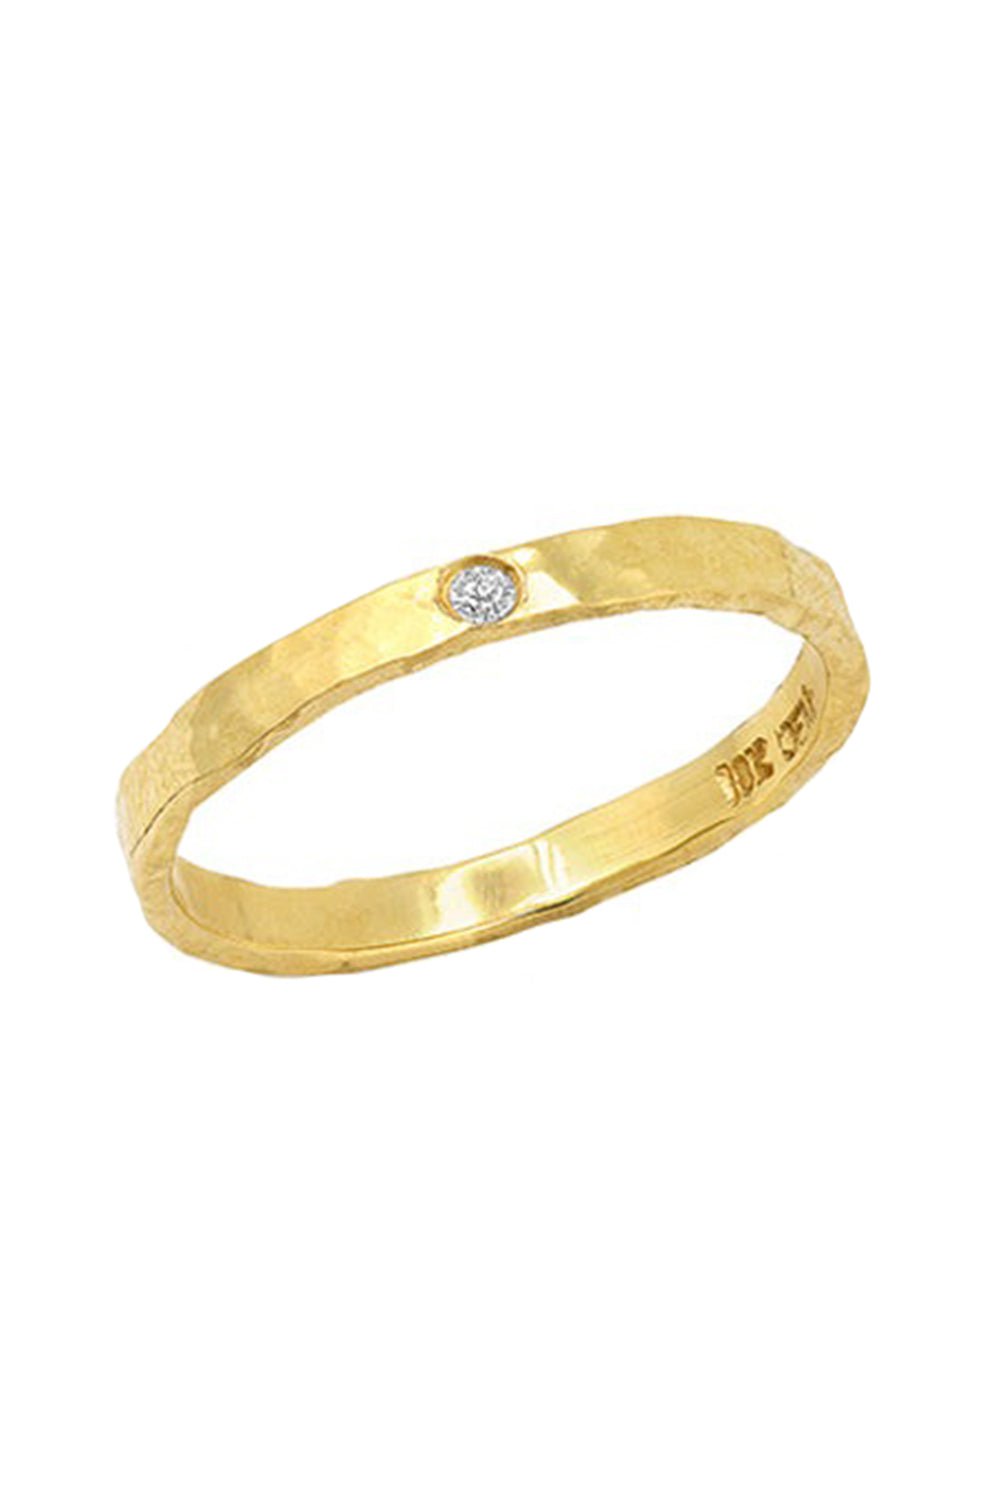 JENNIFER MEYER-Hammered Diamond Ring-YELLOW GOLD